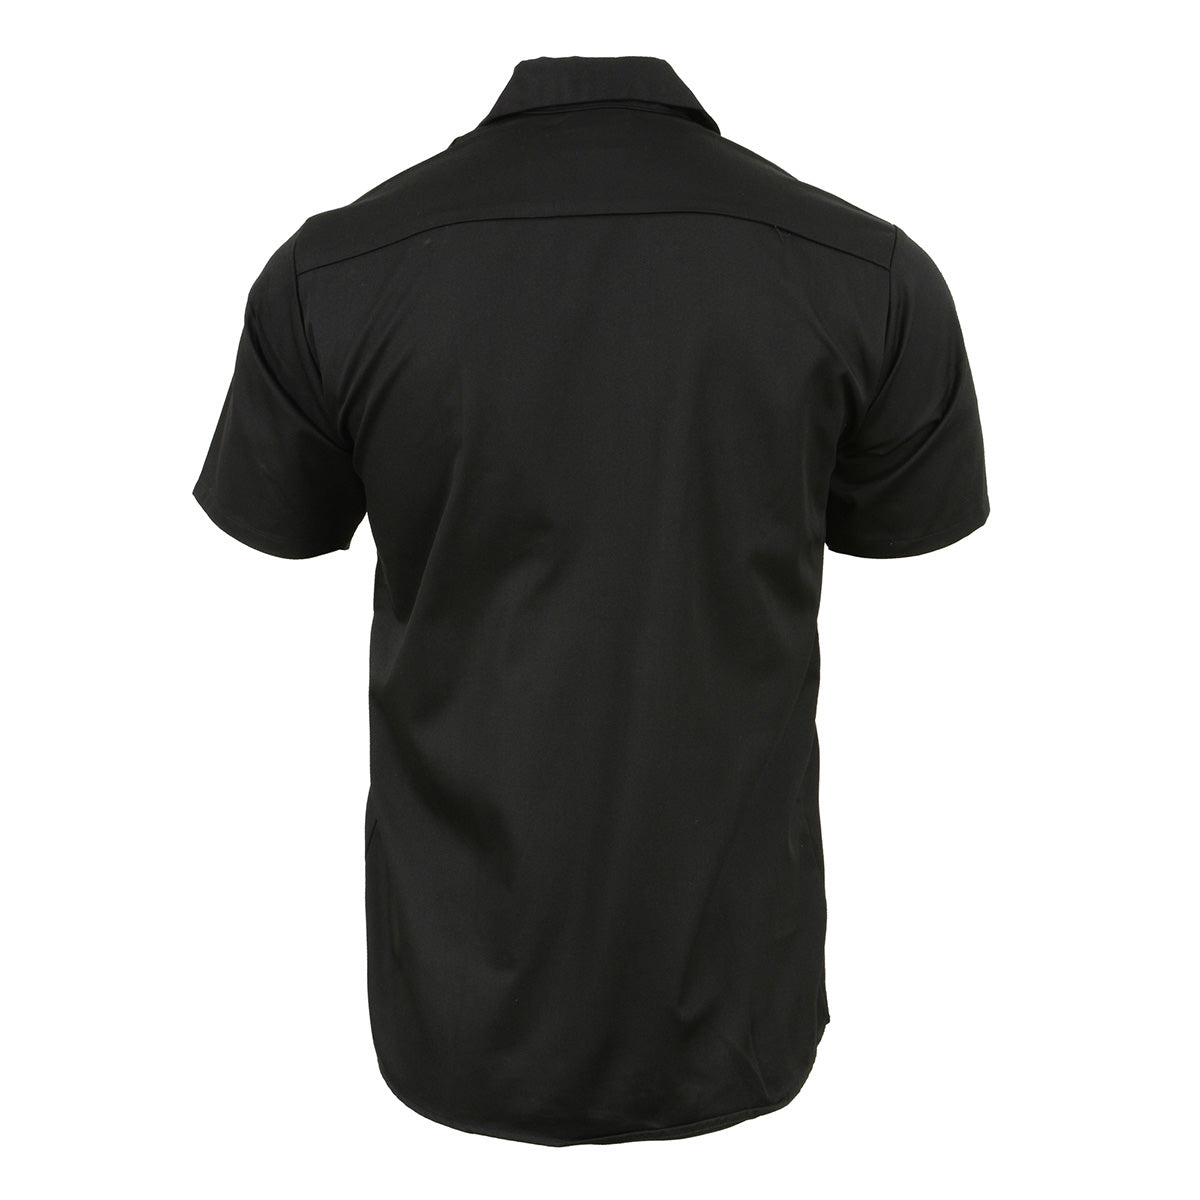 Milwaukee Leather MDM11669 Men's Black Button Up Heavy Duty Work Shirt | Classic Mechanic Work Shirt w/ Pockets